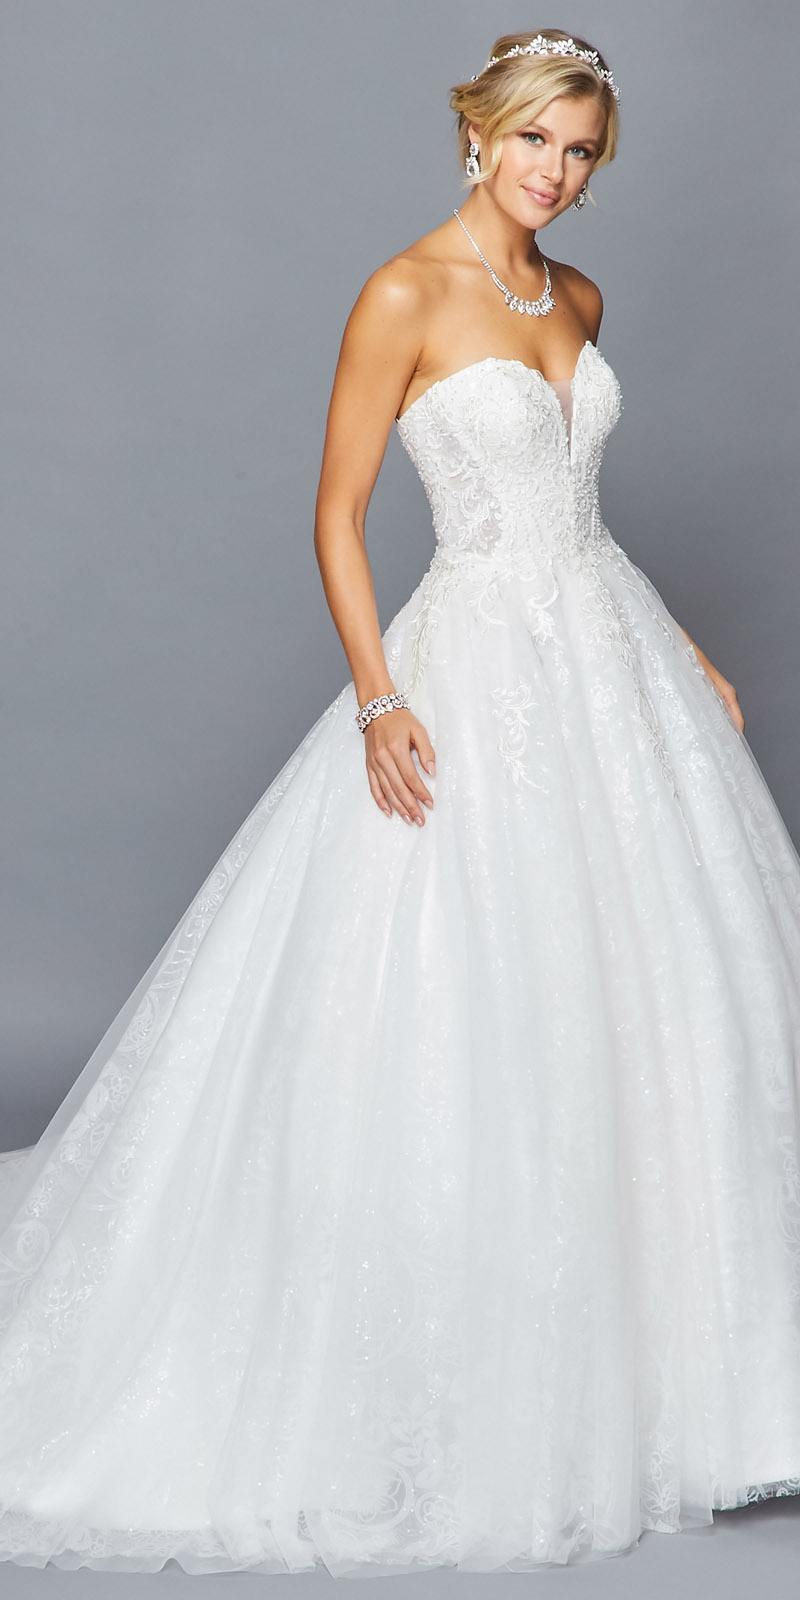 DeKlaire Bridal 429 Strapless Sweetheart Neckline Chapel Train Ballgown Wedding Dress Lace Applique